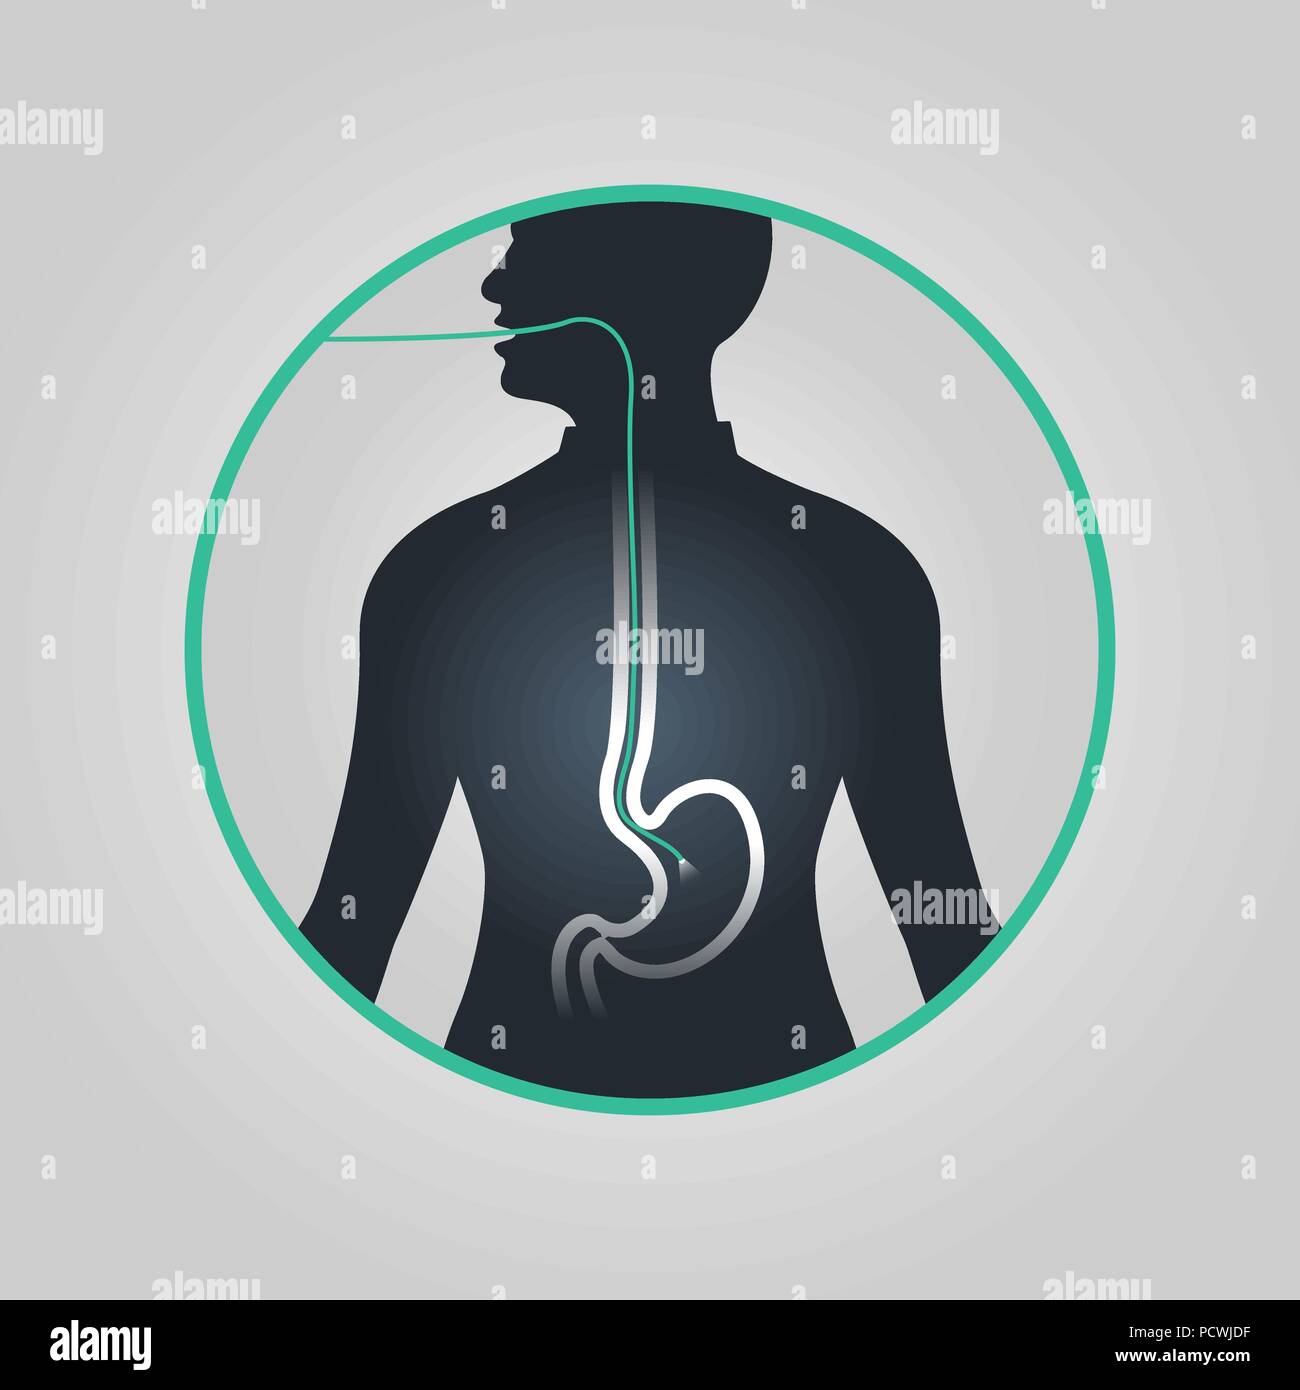 Gastroscopy vector logo icon illustration Stock Vector